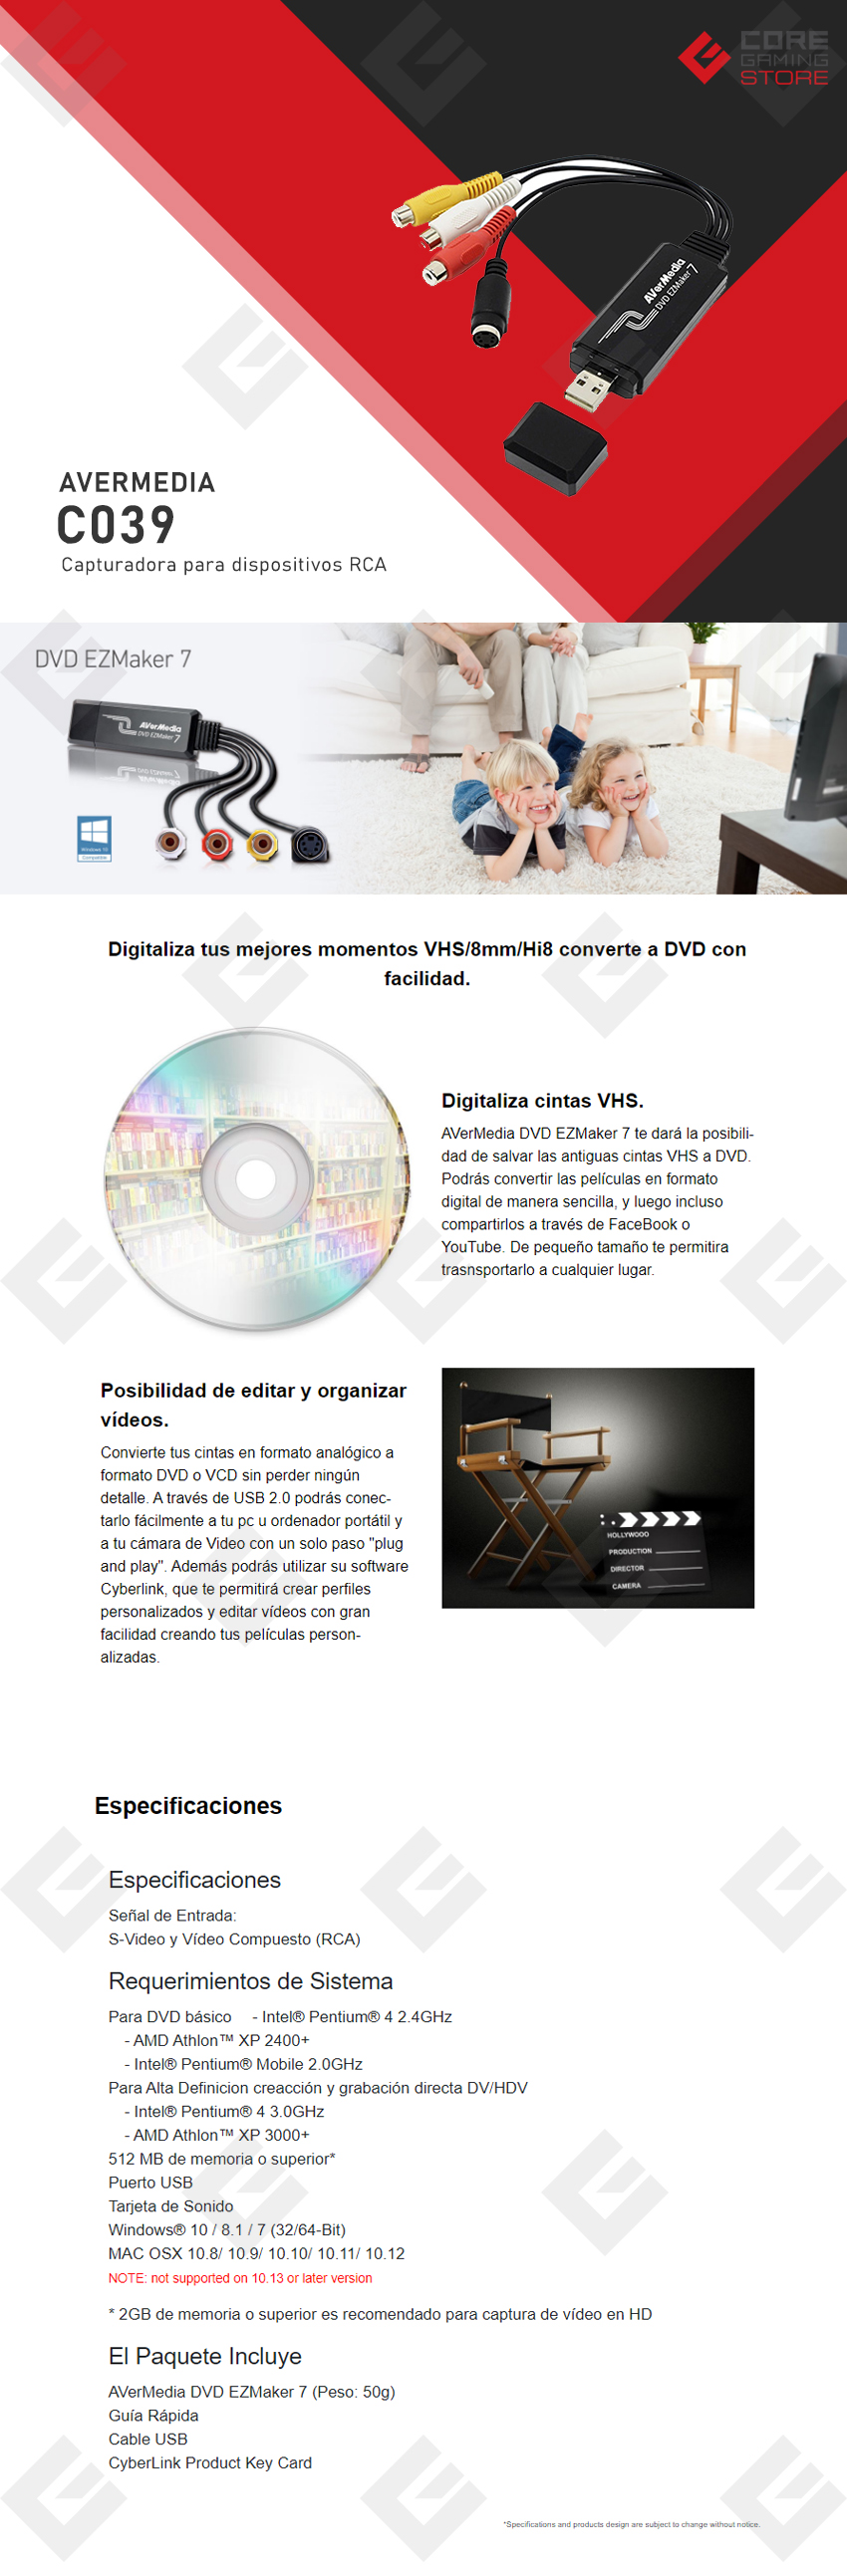 Capturadora de Video AVerMedia DVD EZMaker 7 - C039